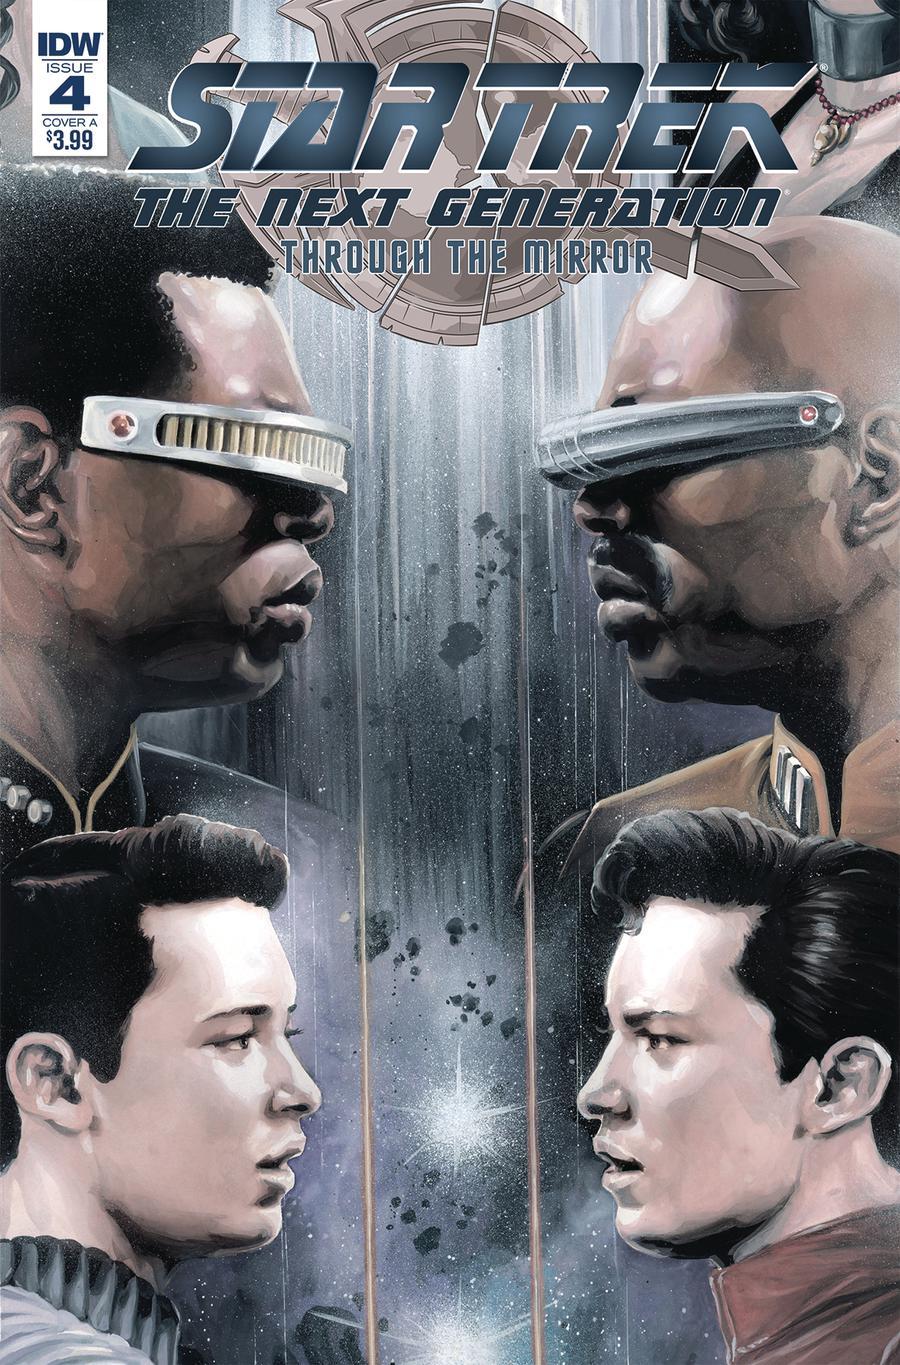 Star Trek The Next Generation Through The Mirror Vol. 1 #4